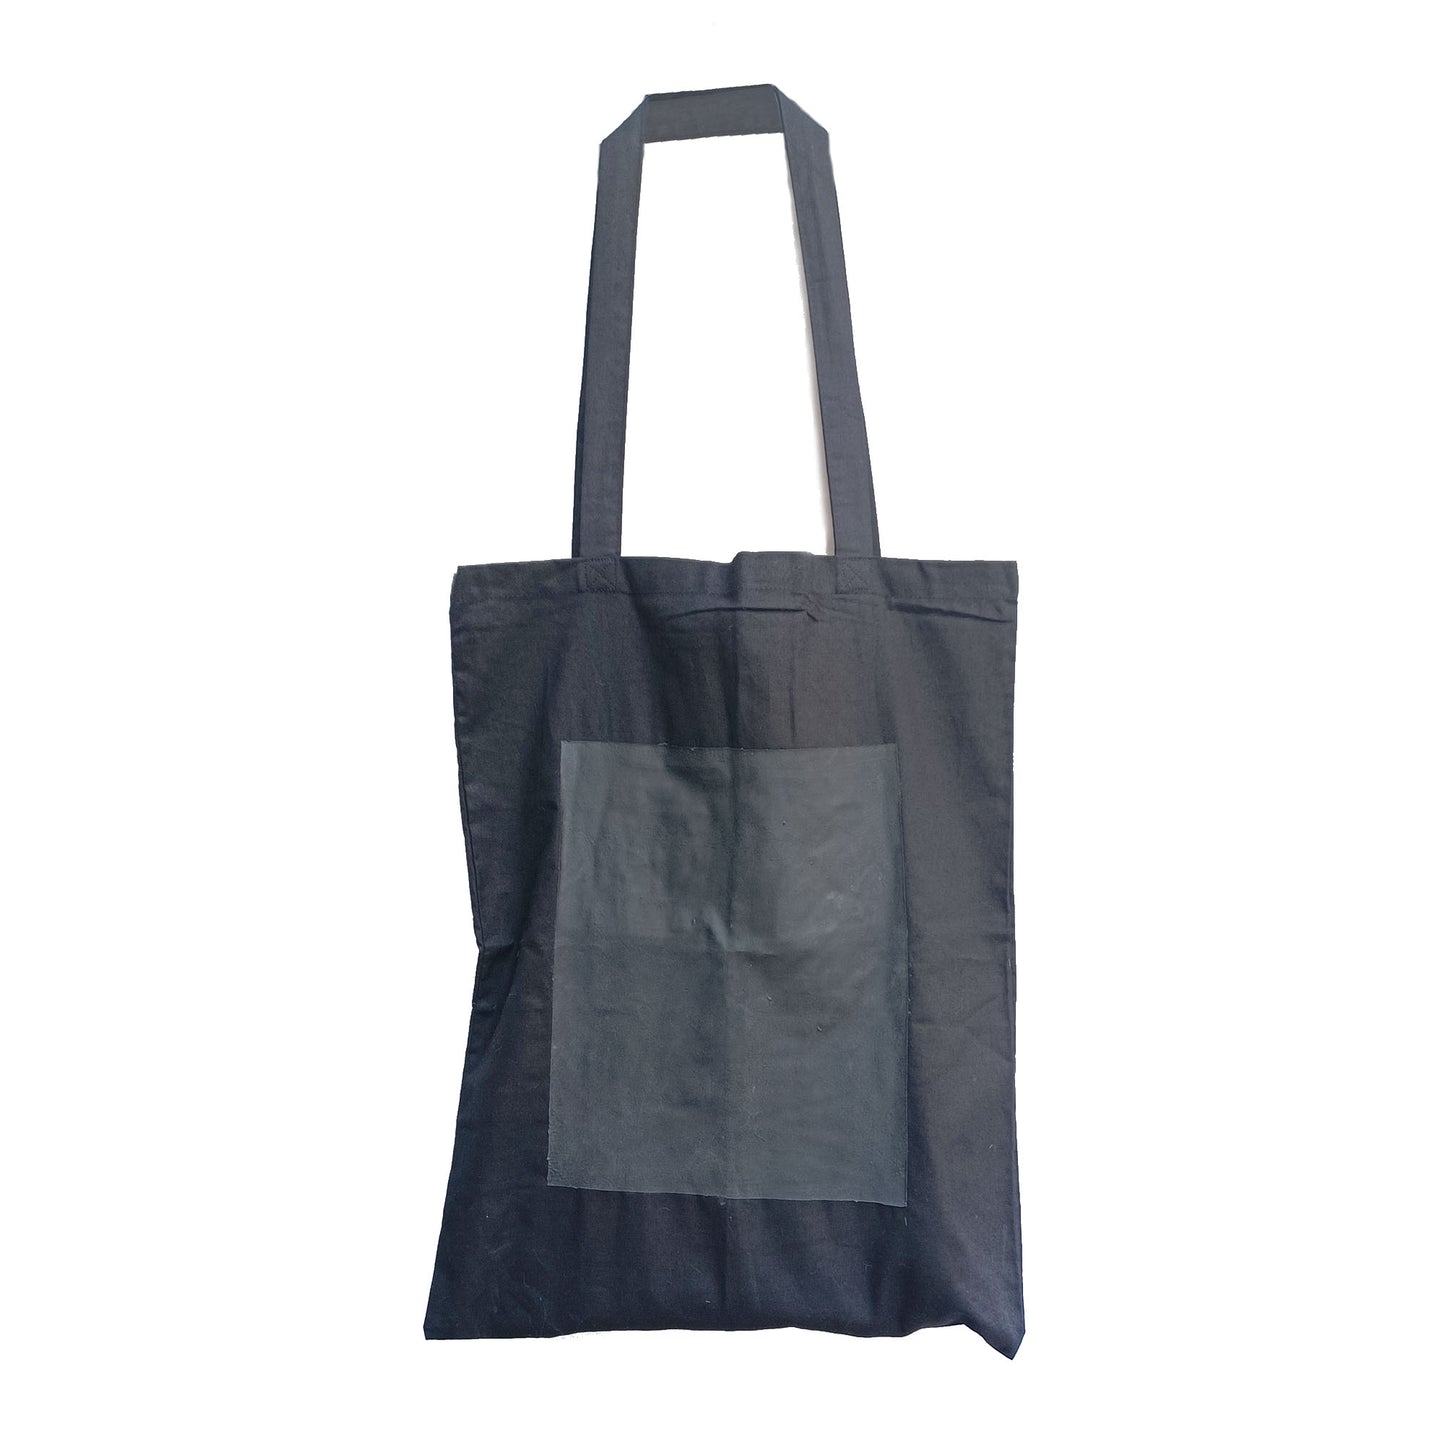 Cotton shopper bag. Latex print